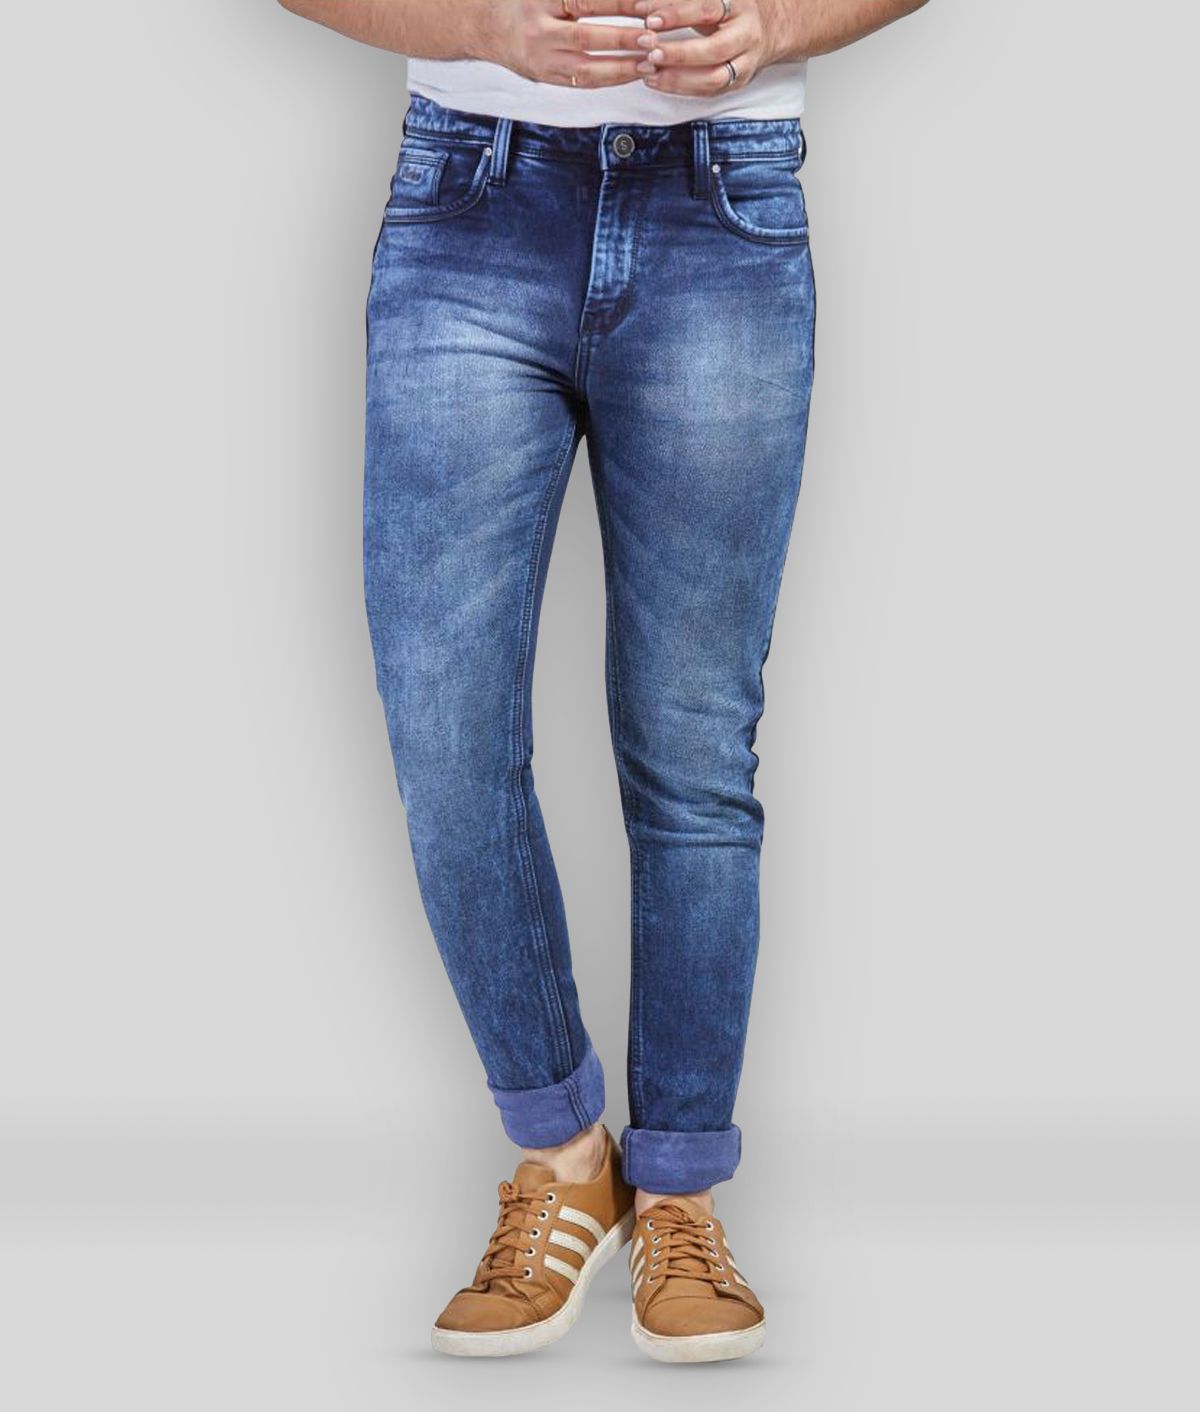 HASASI JEANS - Indigo Blue 100% Cotton Regular Fit Men's Jeans ( Pack of 1 )